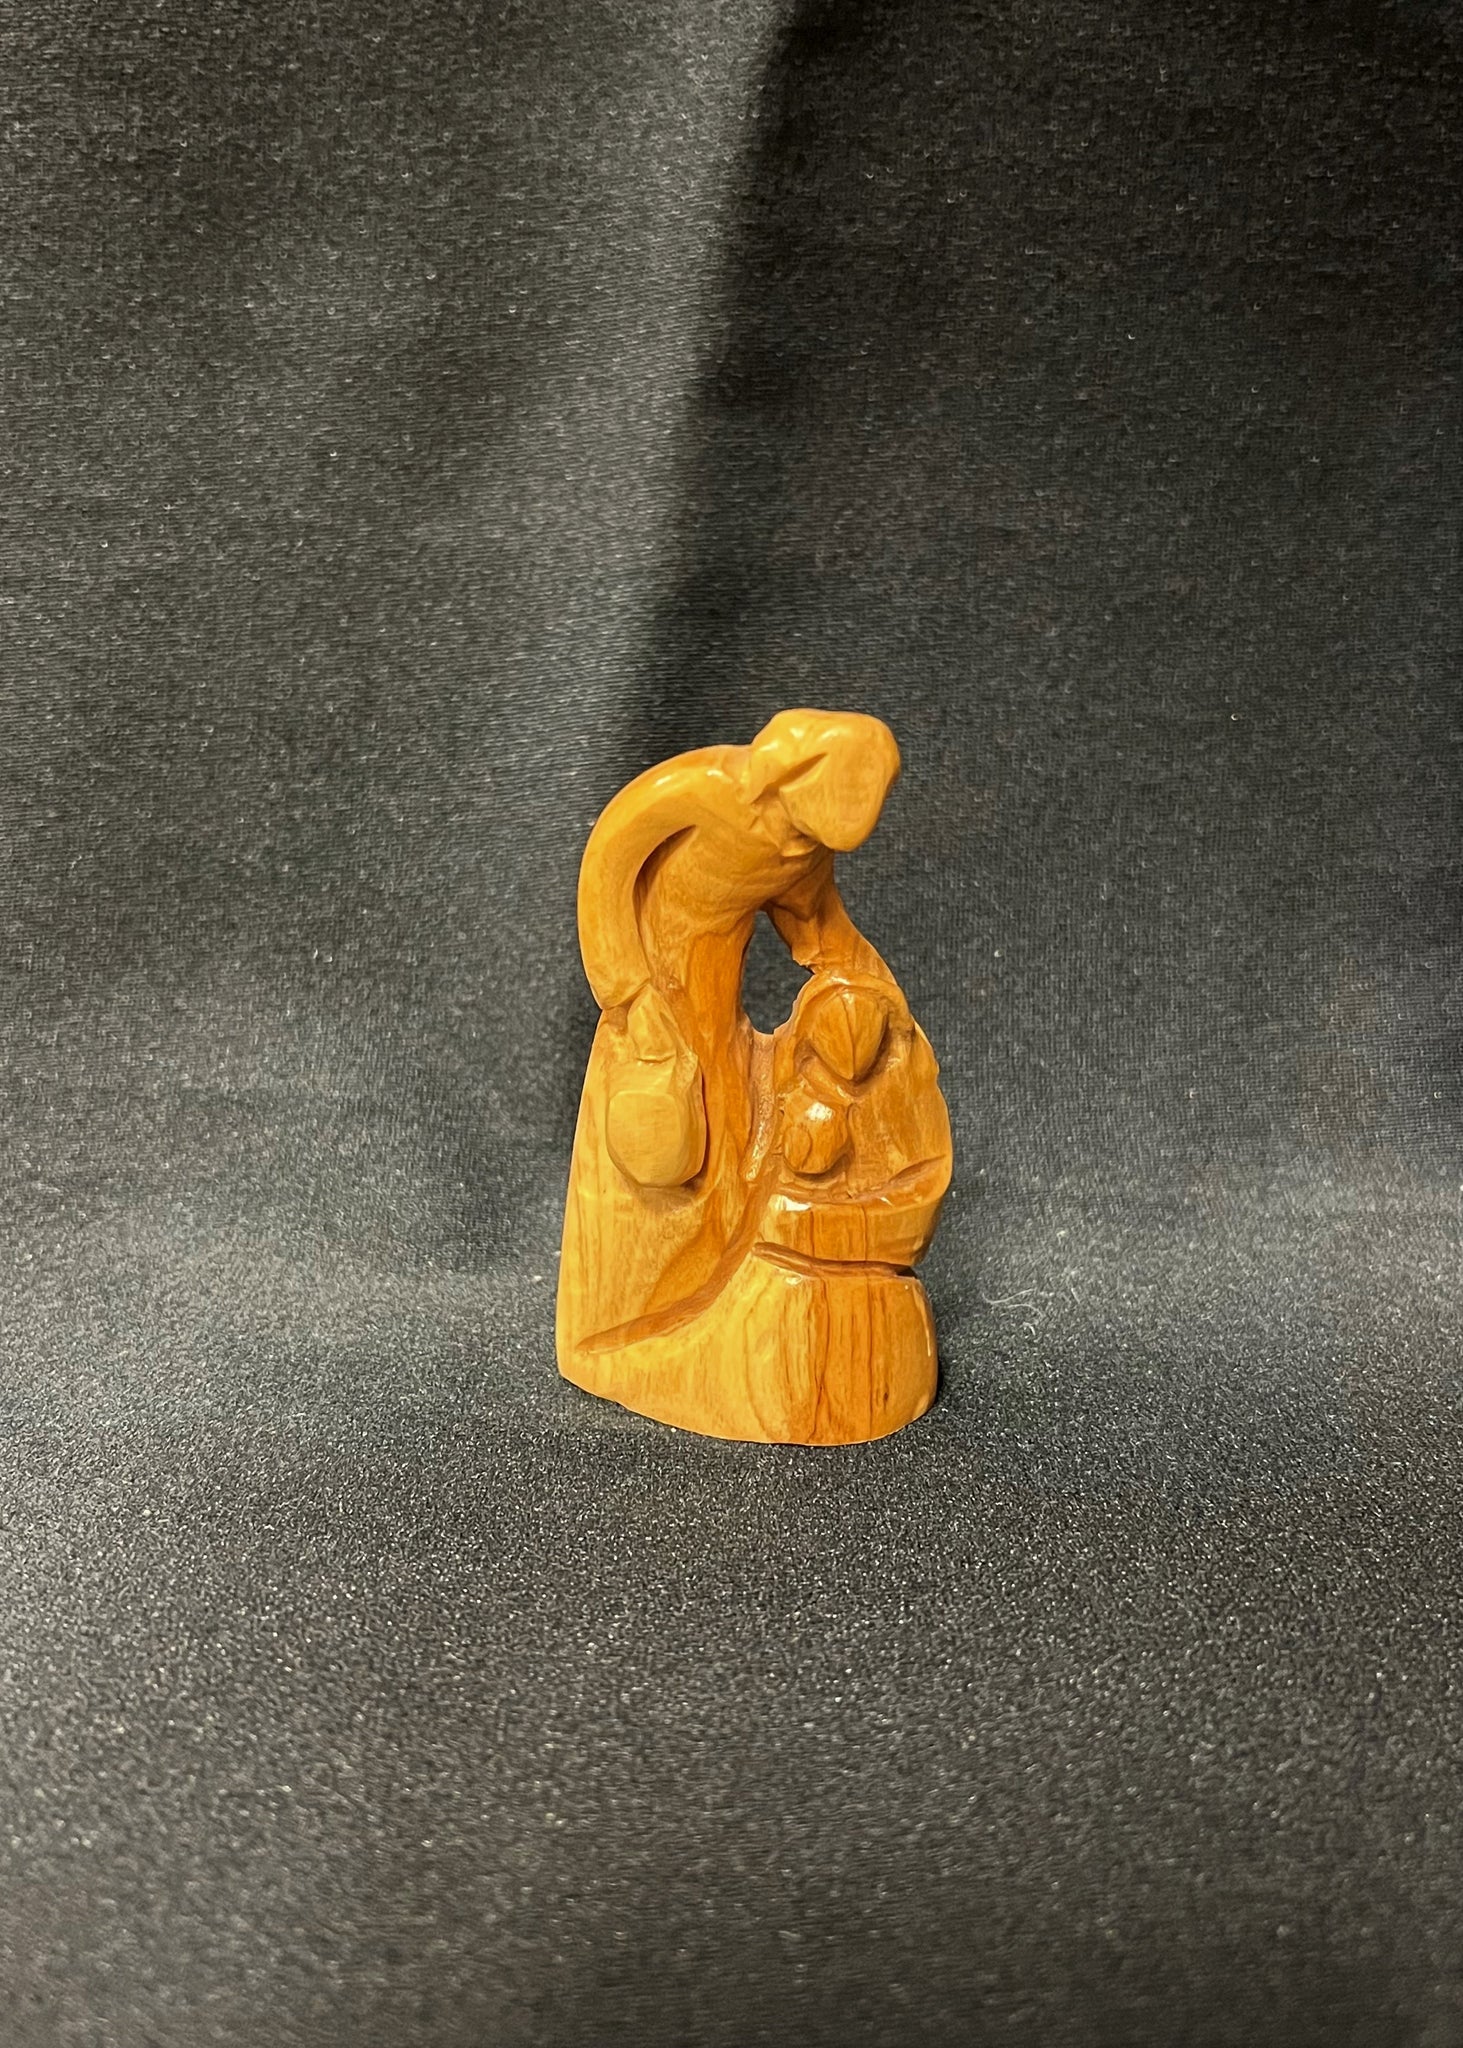 Olivewood Mini Holy Family Statue